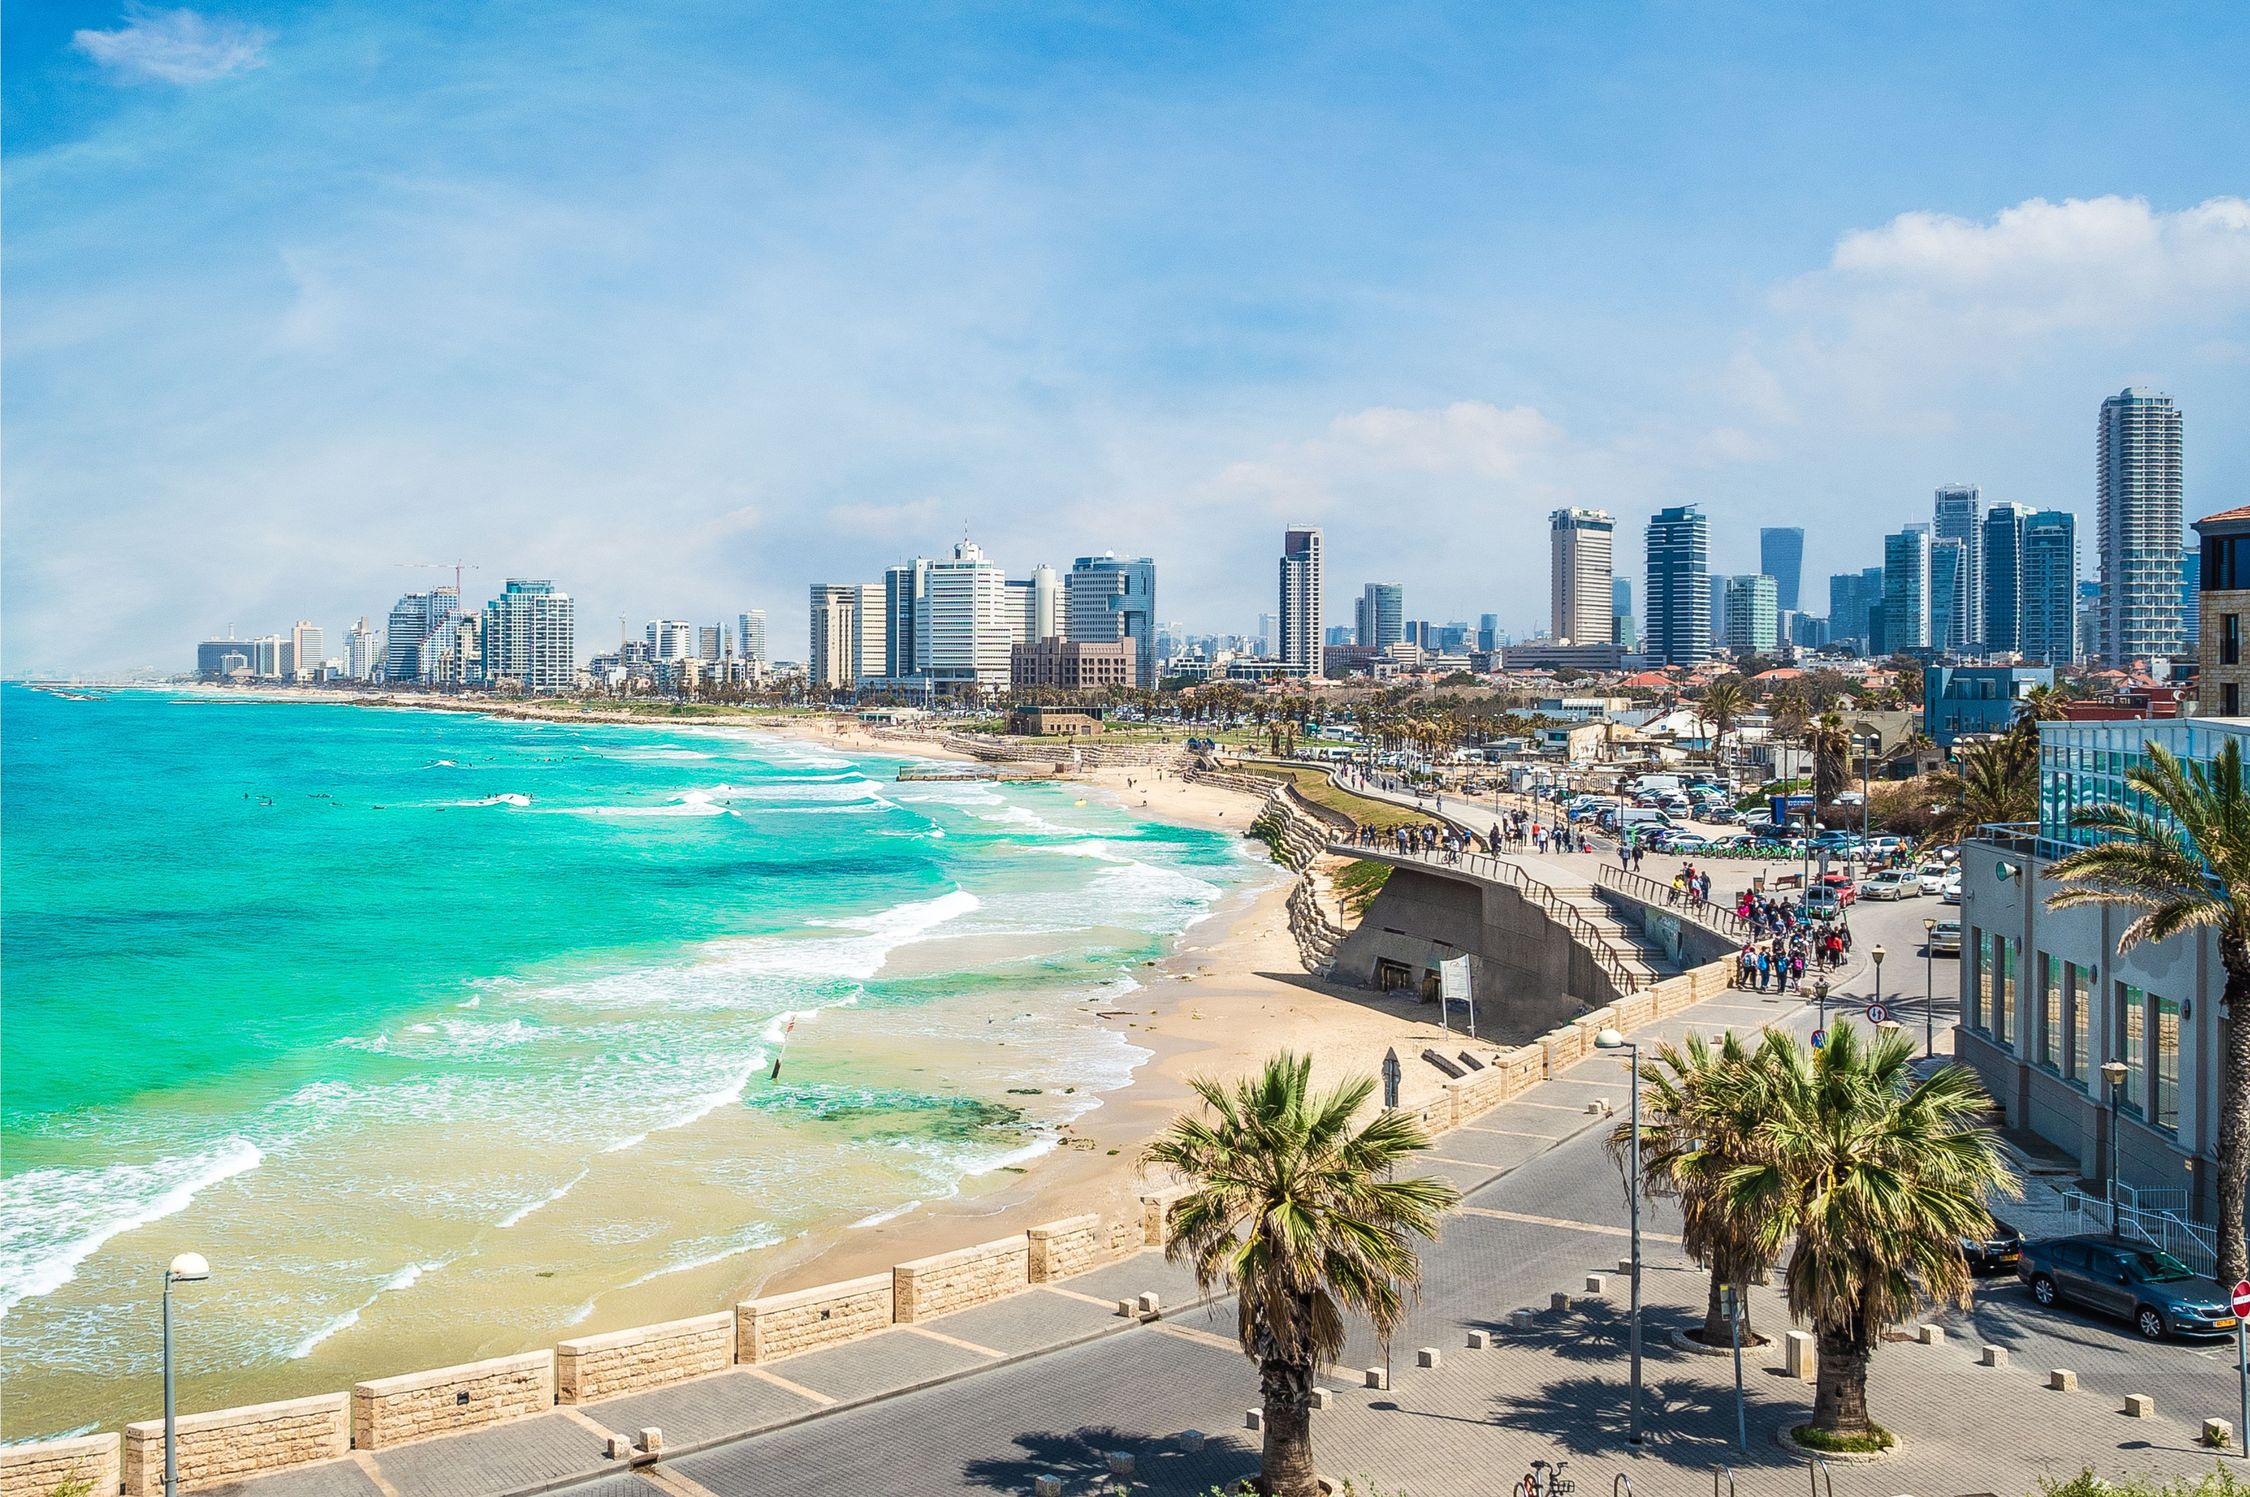 InterContinental David Tel Aviv - The hotel - Beach and the city